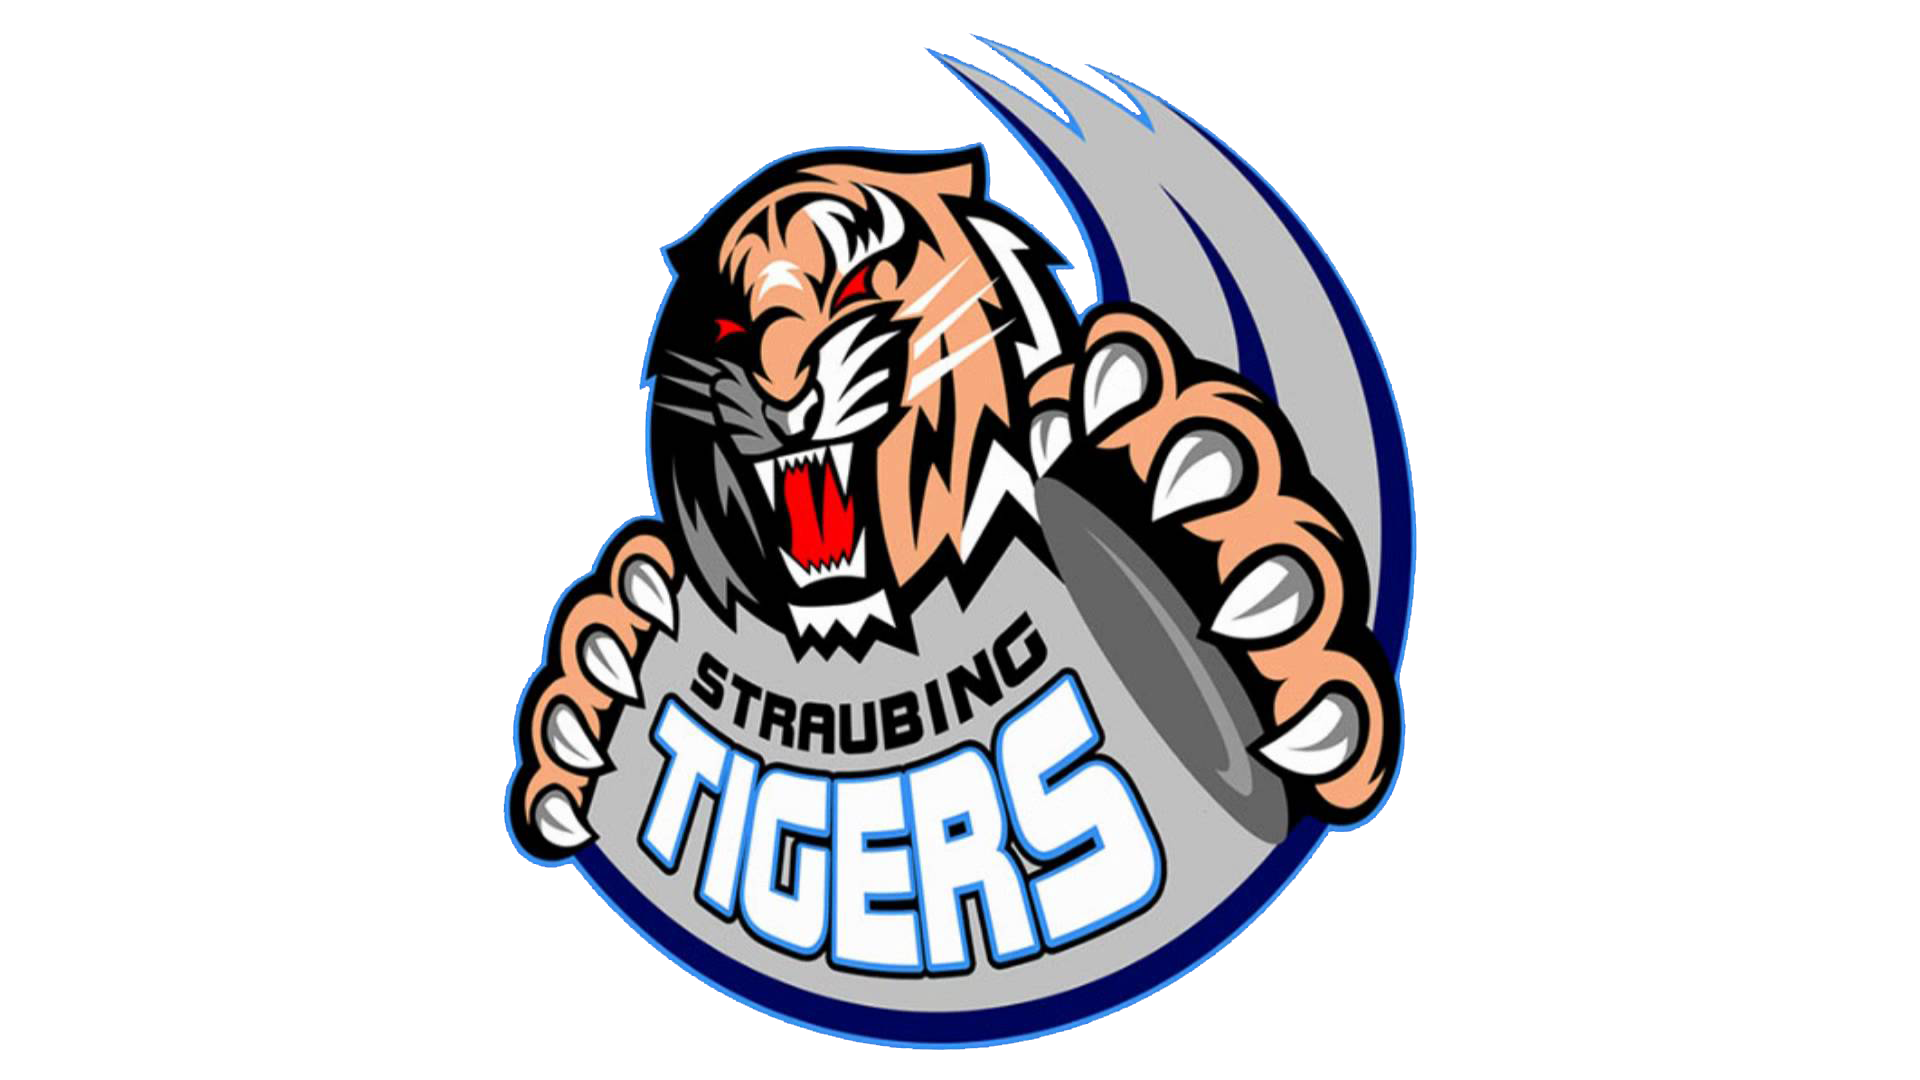 straubing-tigers-1